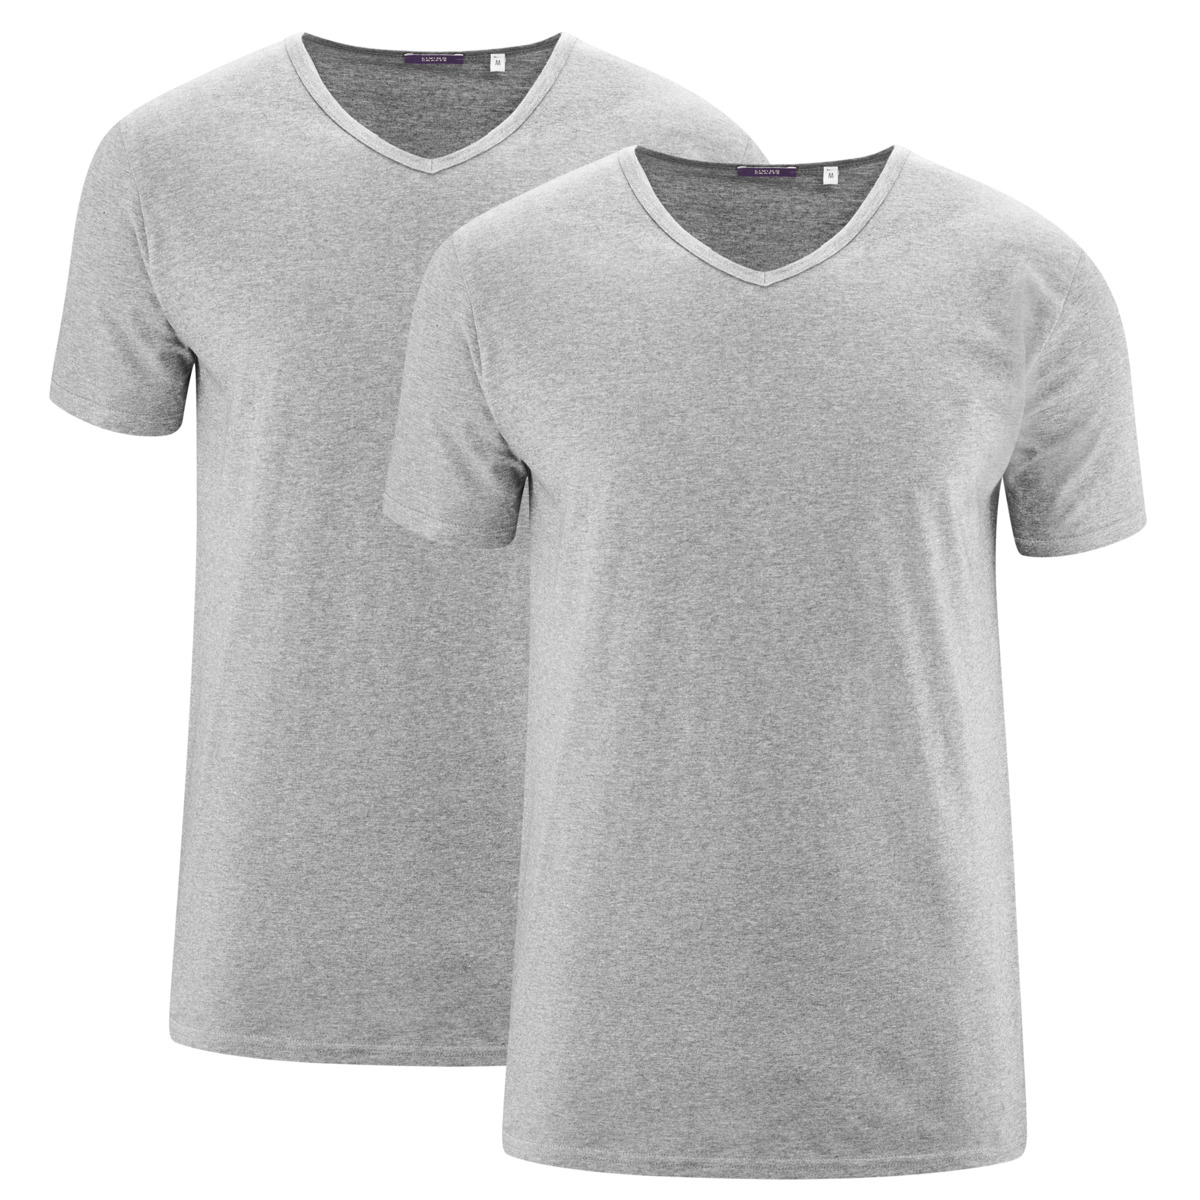 Grey T-shirt, pack of 2, DEAN